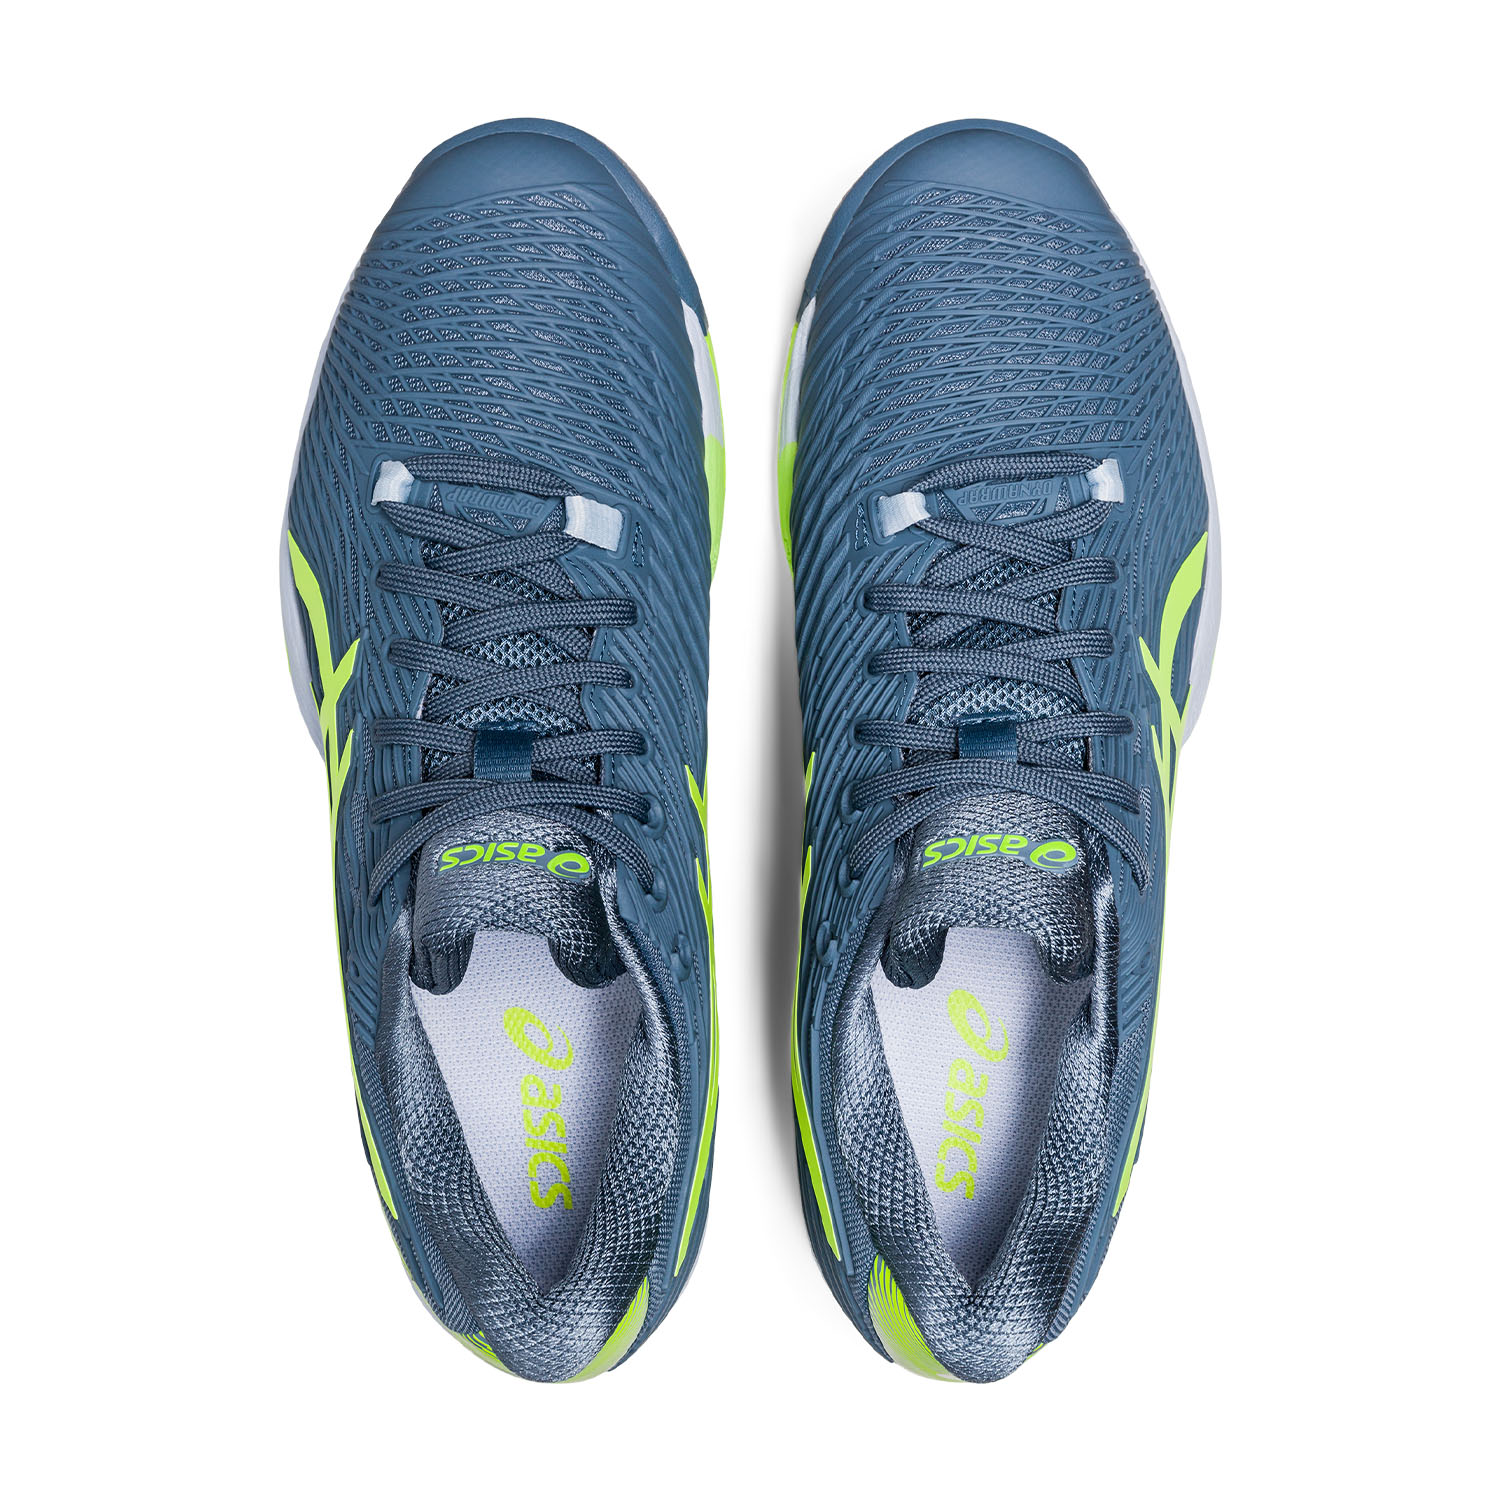 Asics Solution Speed FF 2 Men's Tennis Shoes - Steel Blue